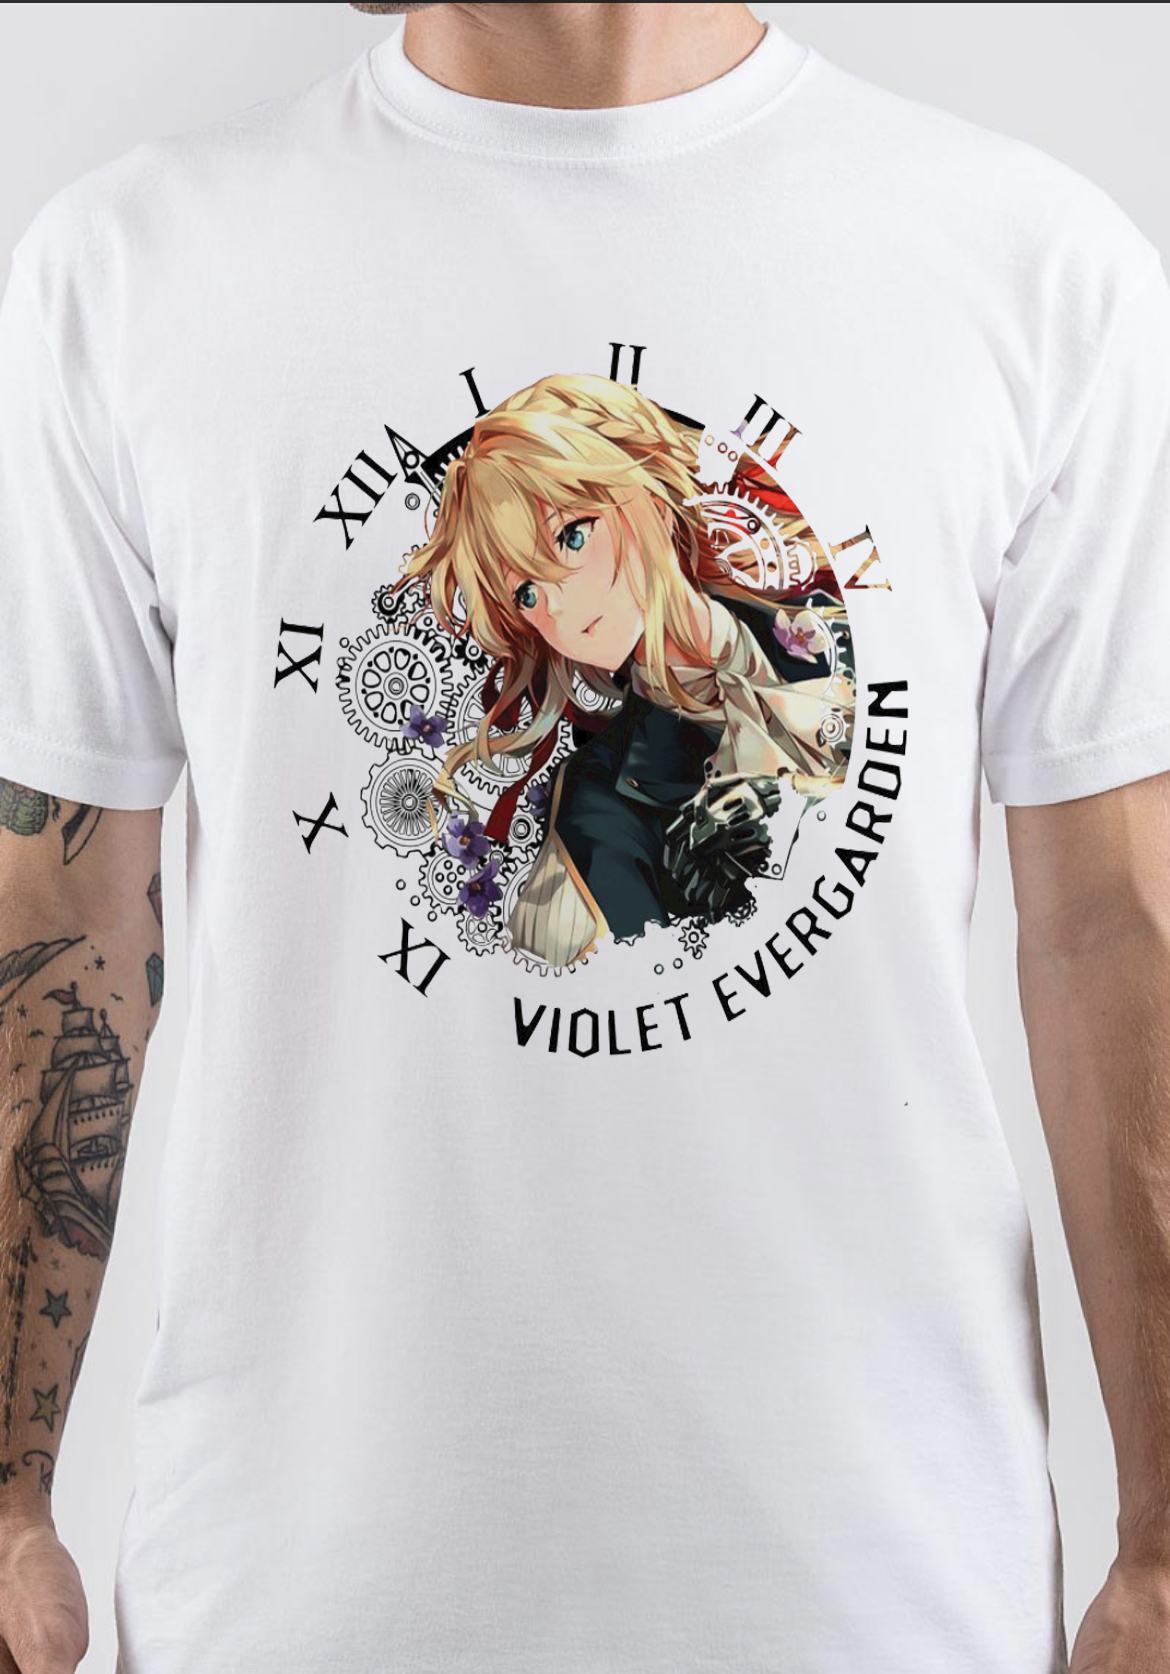 Violet Evergarden Merchandise: Cherish the Moments of Love